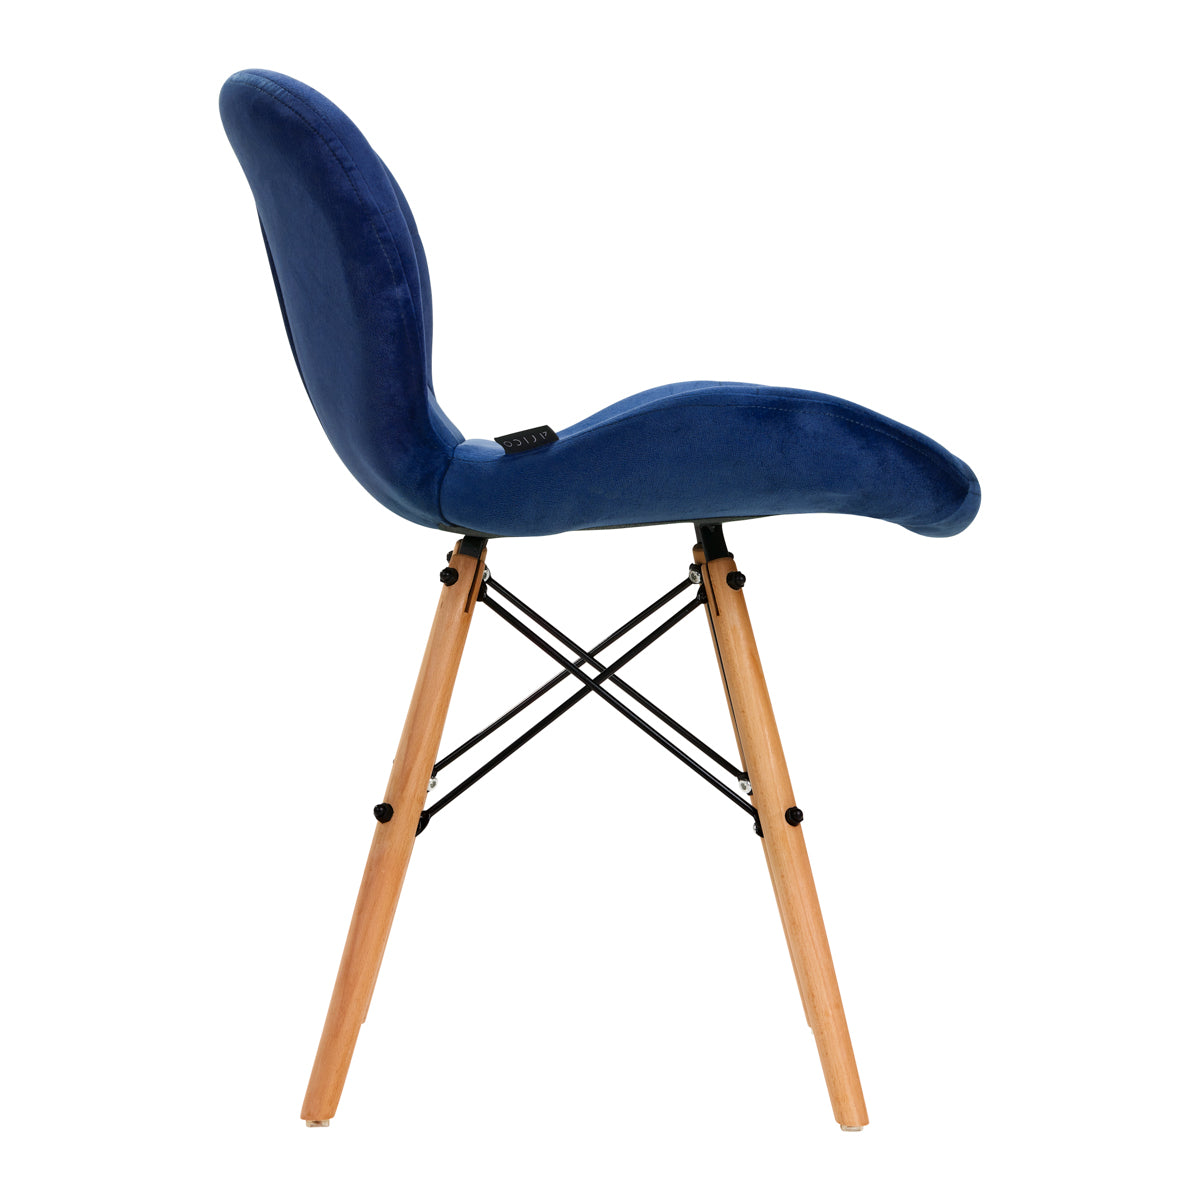 4Rico cosmetic chair QS-186 velvet navy blue 